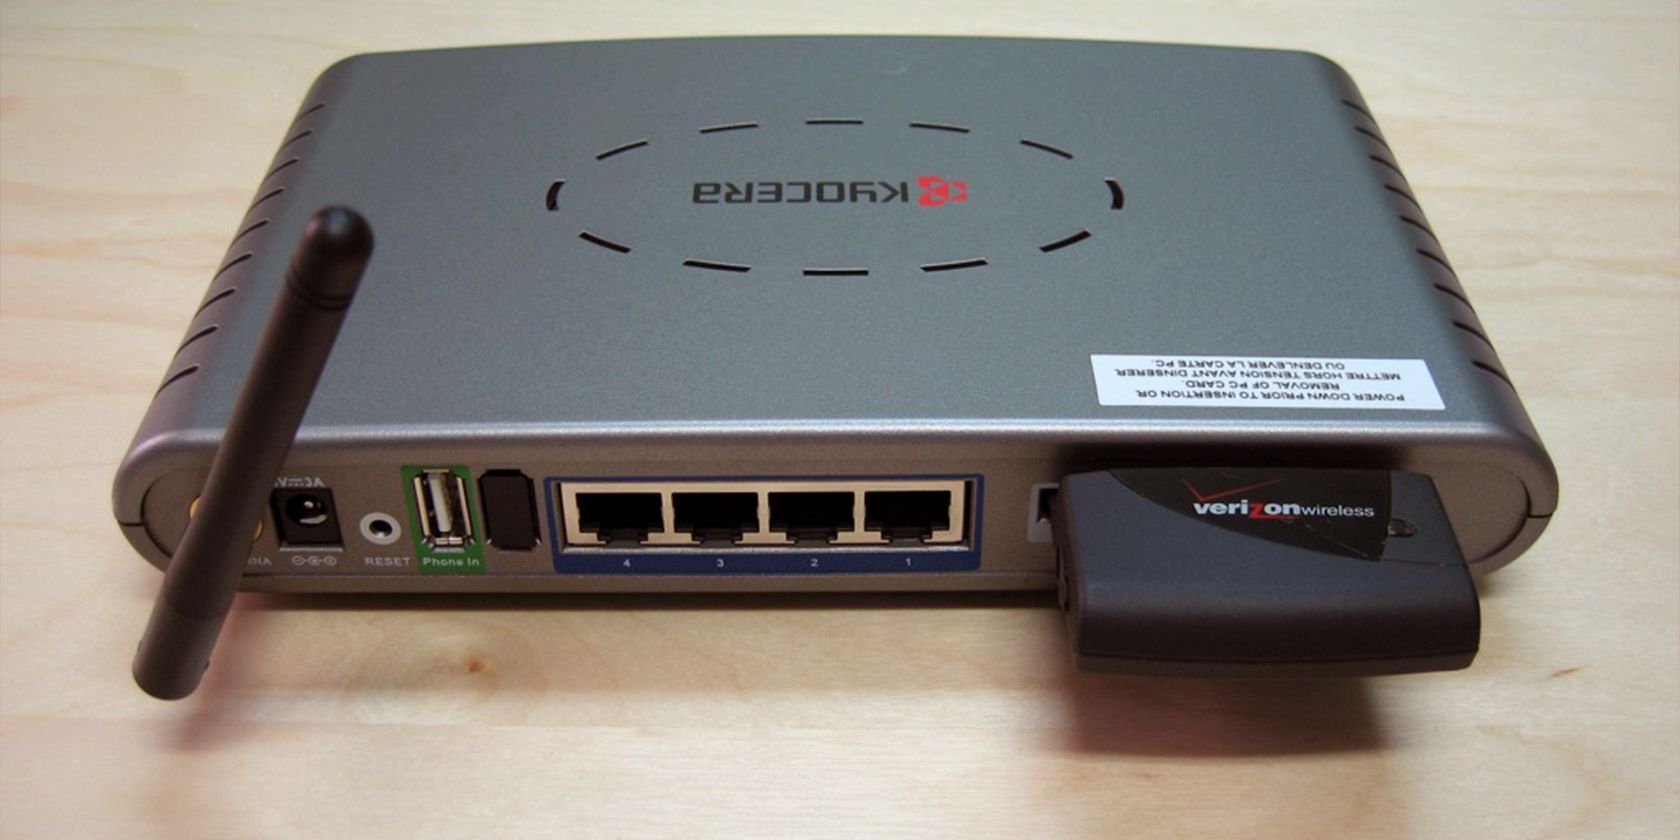 2-In-1 Wireless USB Print Server + USB Printer Network LAN Adapter